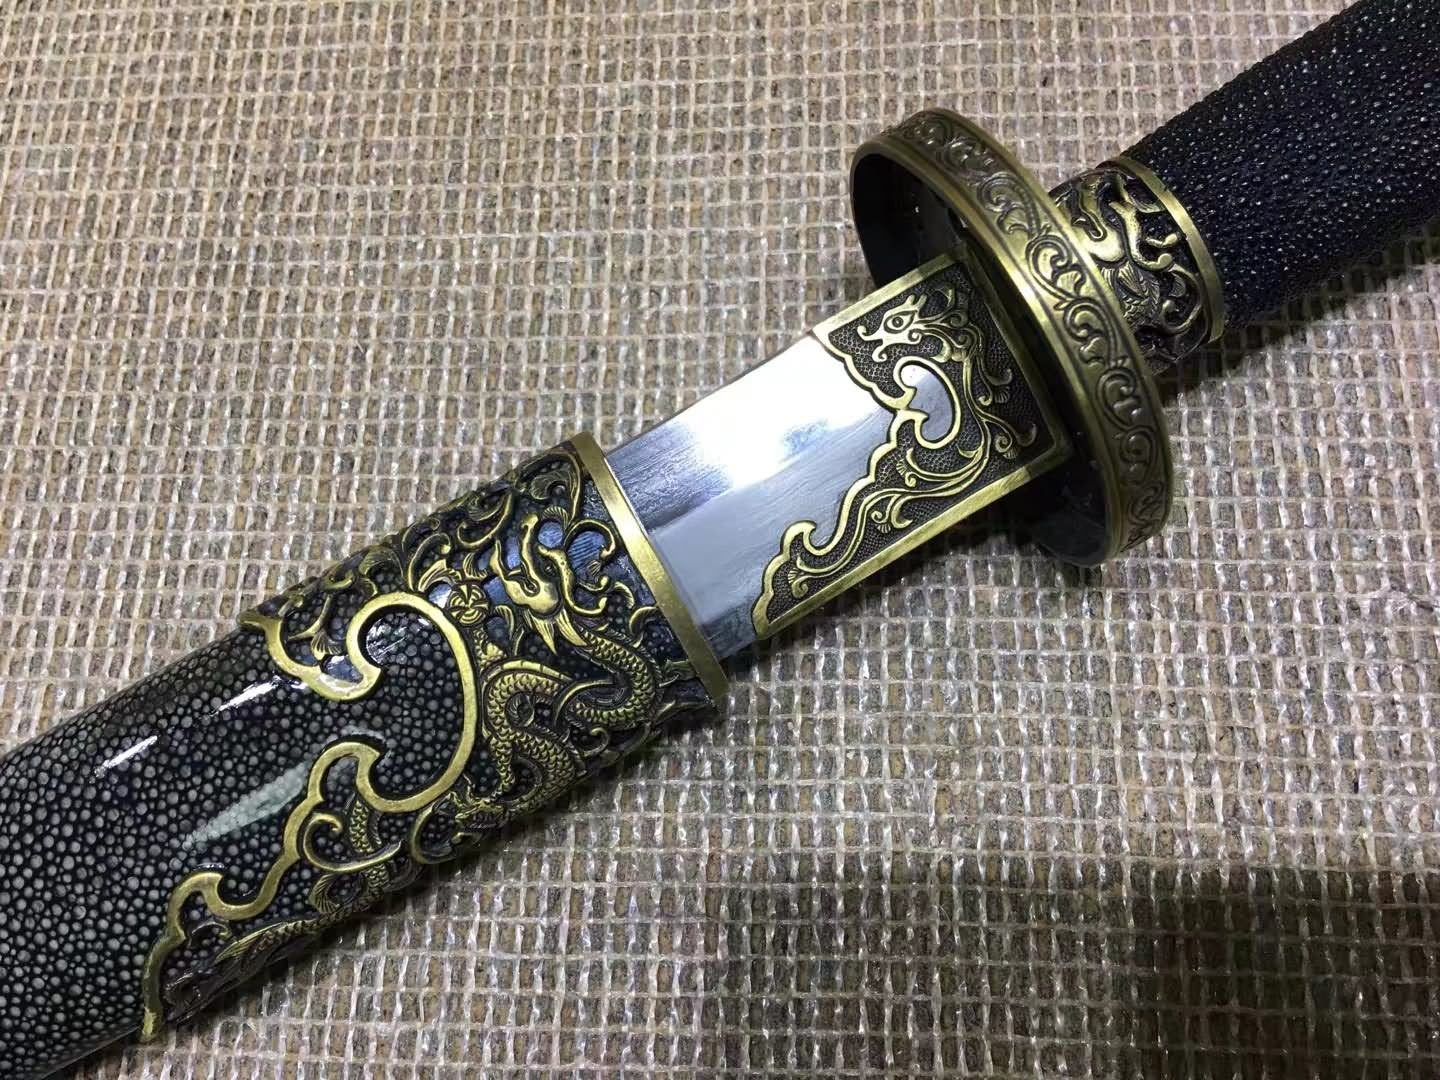 Broadsword(Damascus steel burn blade,Skin scabbard)Full tang,Length 38" - Chinese sword shop